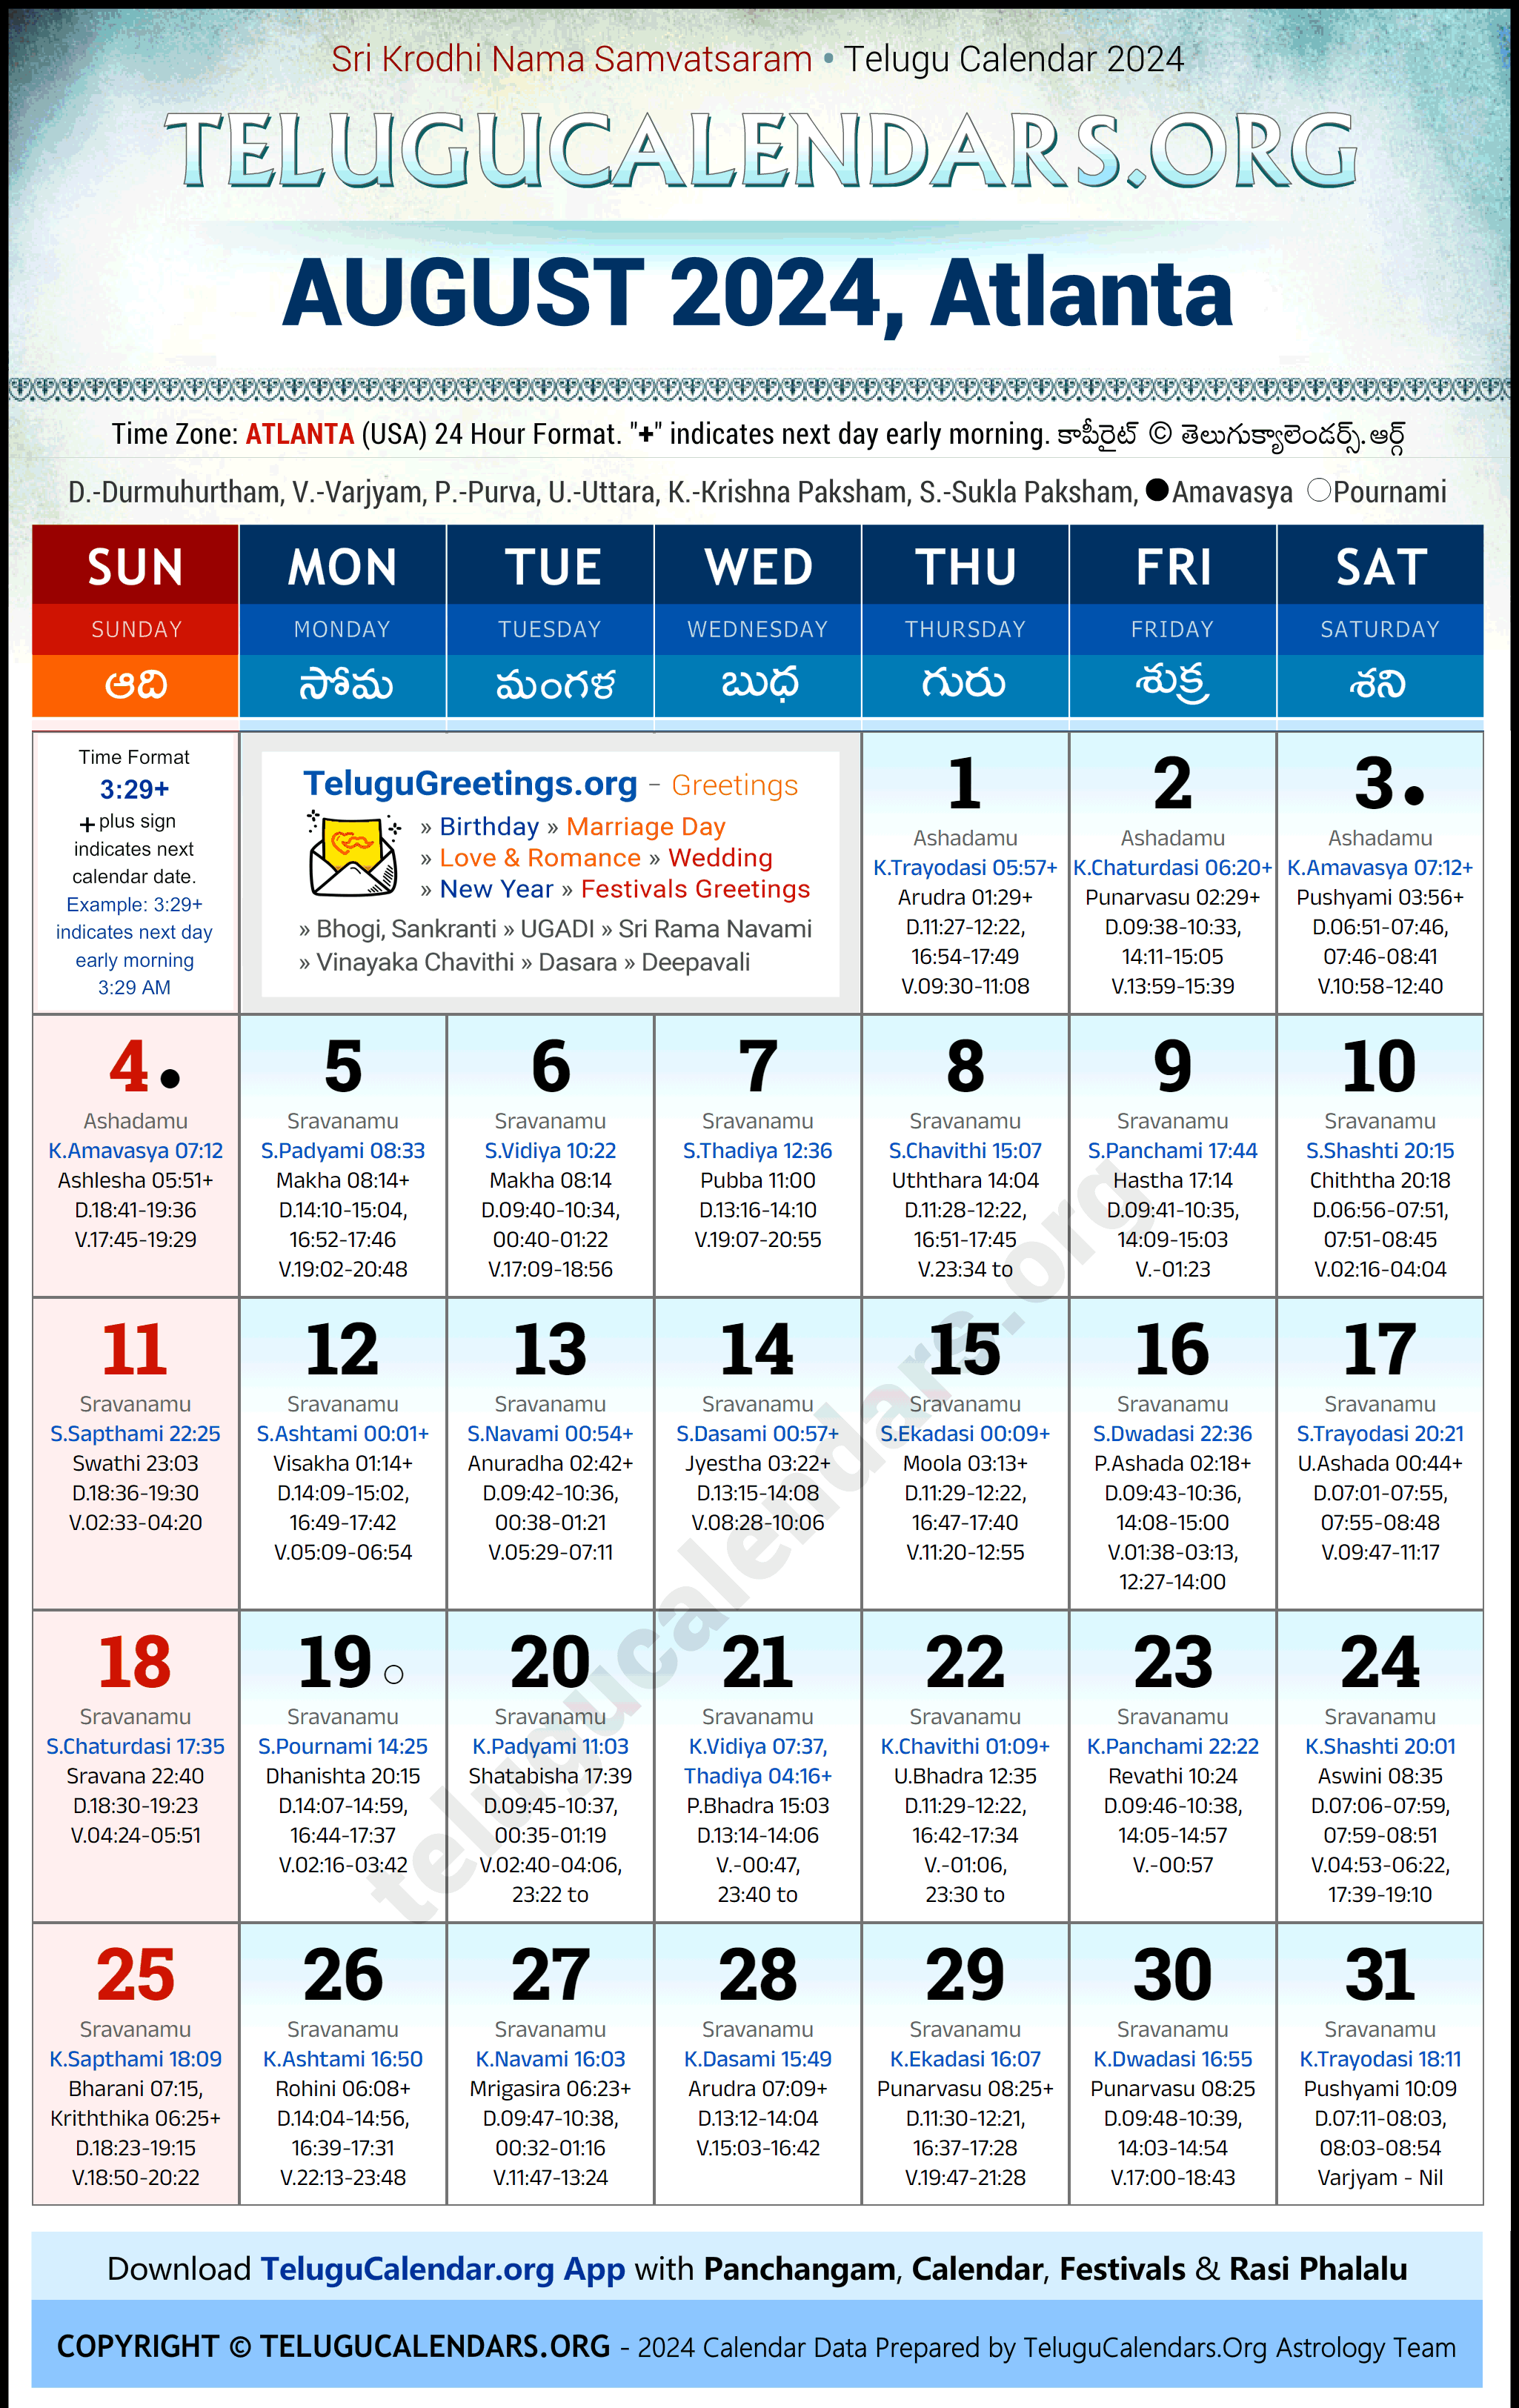 Telugu Calendar 2024 August Festivals for Atlanta